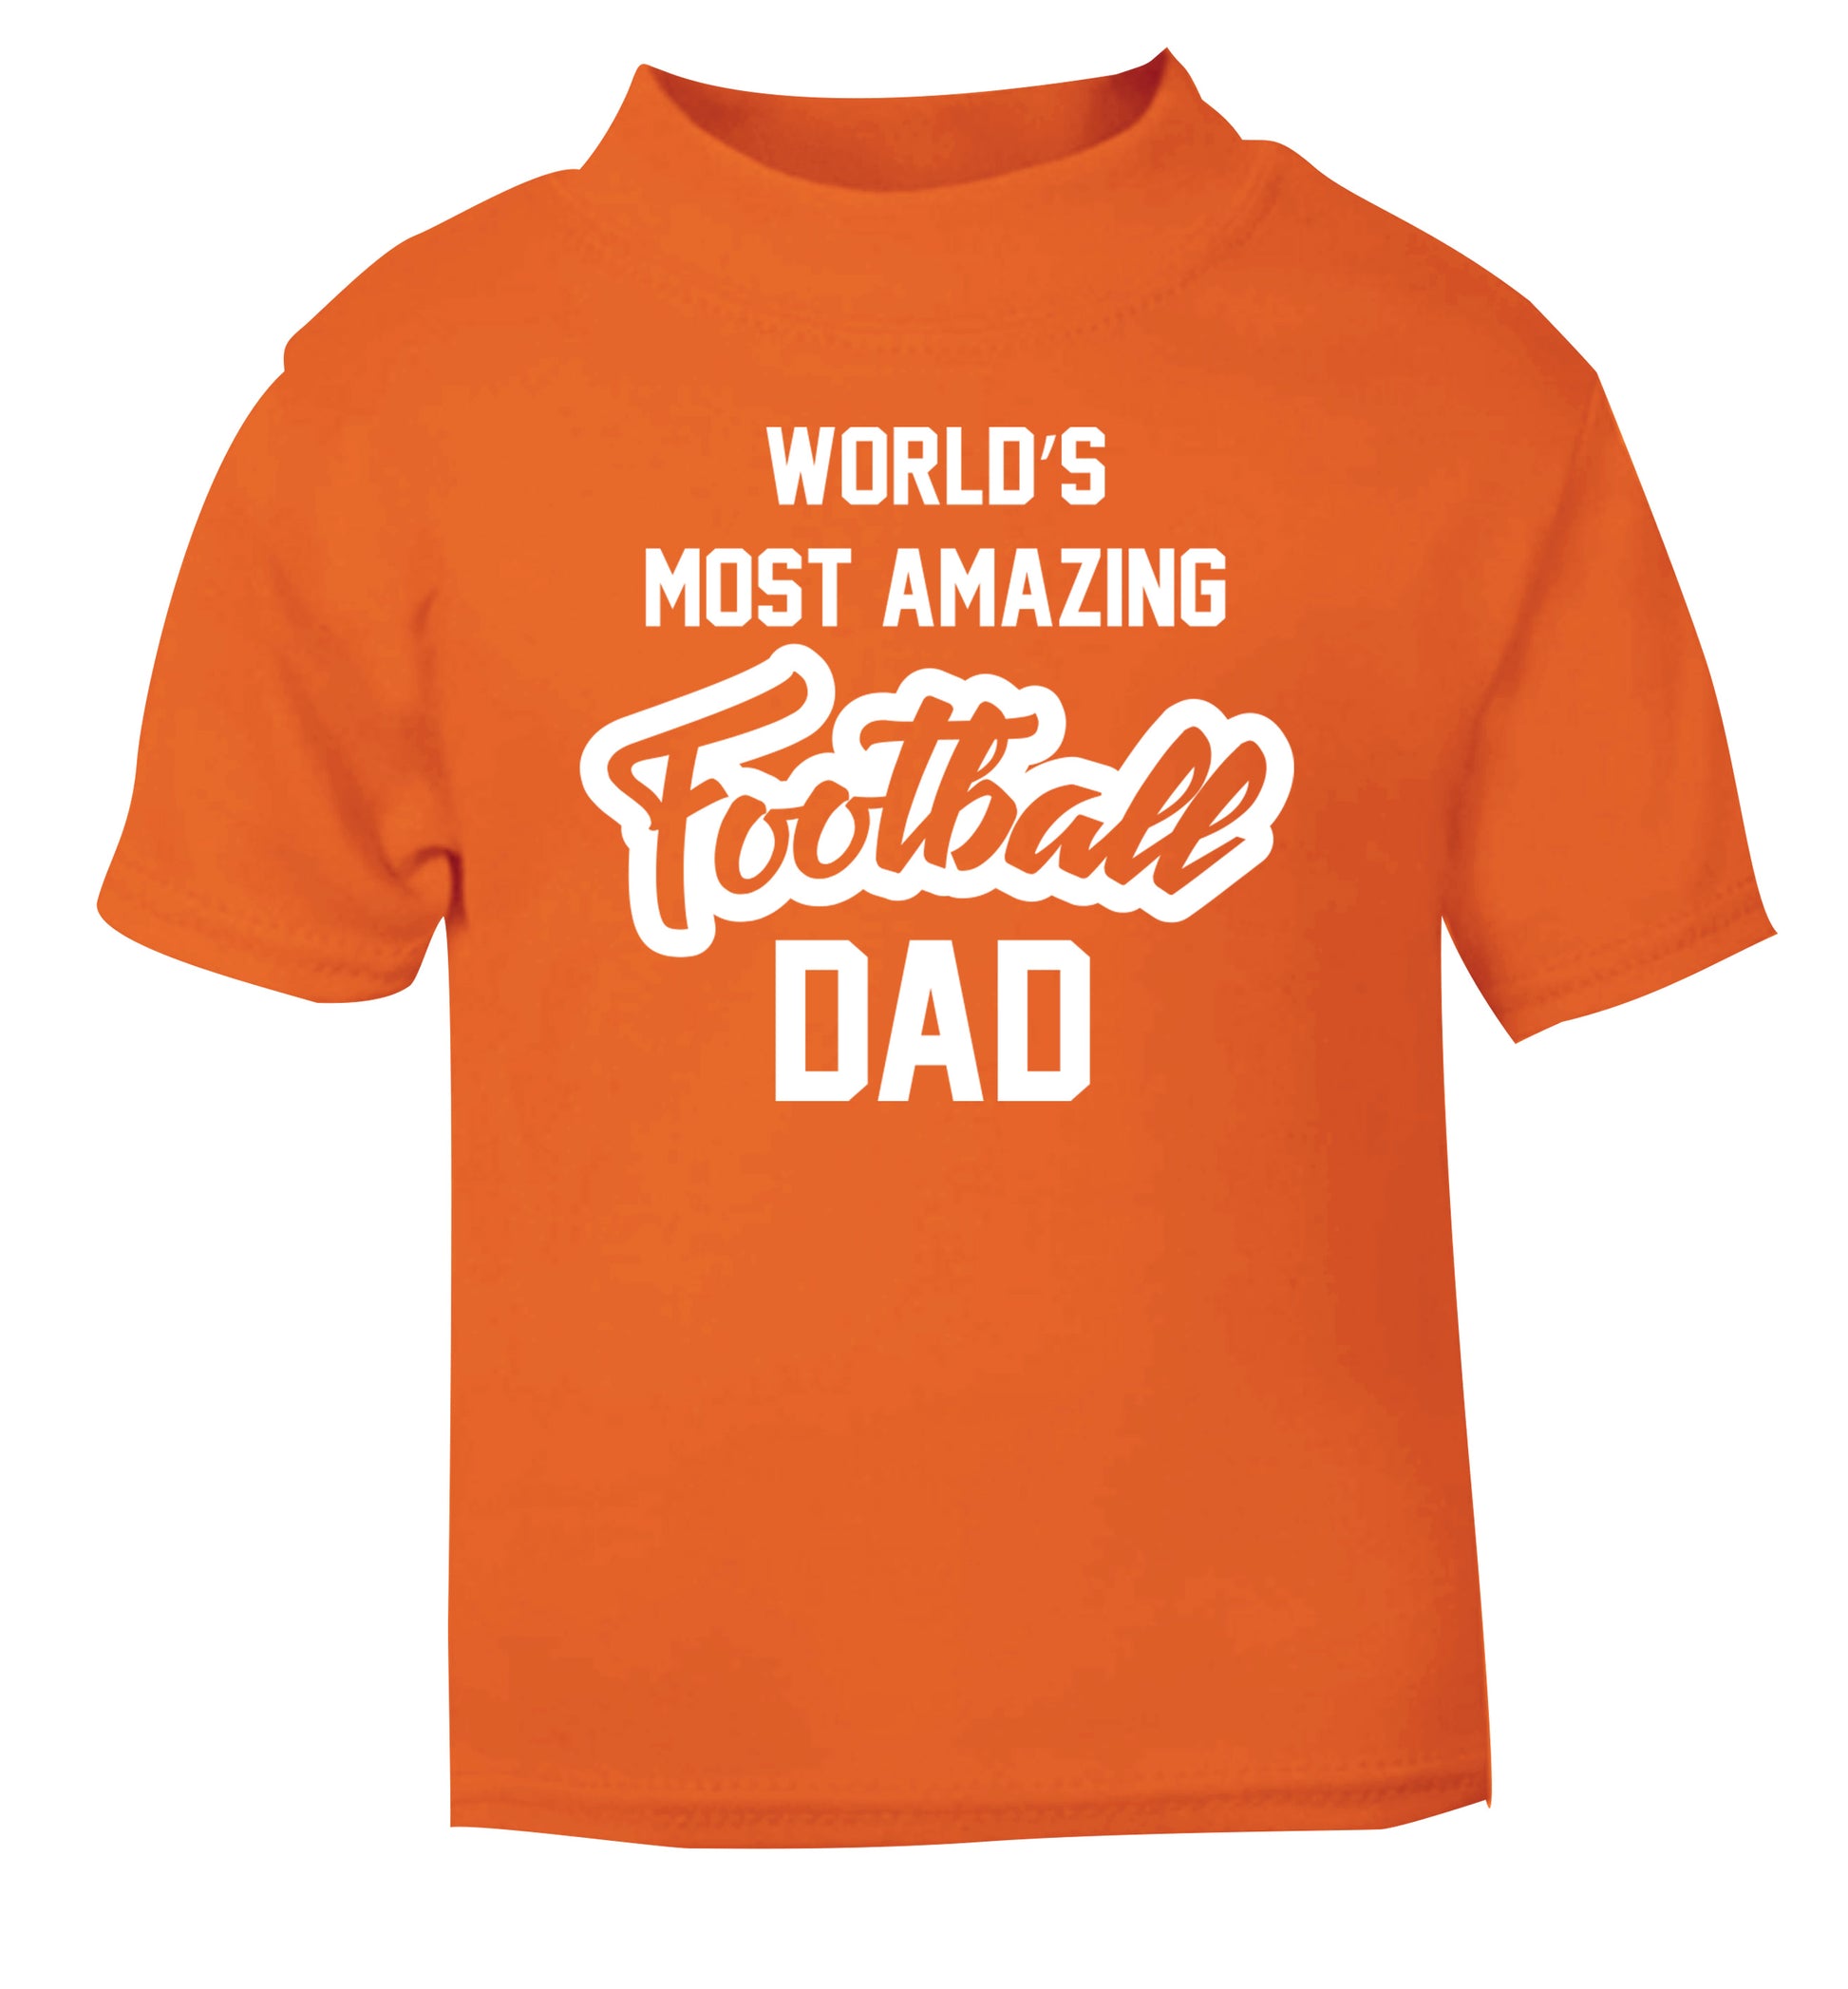 Worlds most amazing football dad orange Baby Toddler Tshirt 2 Years